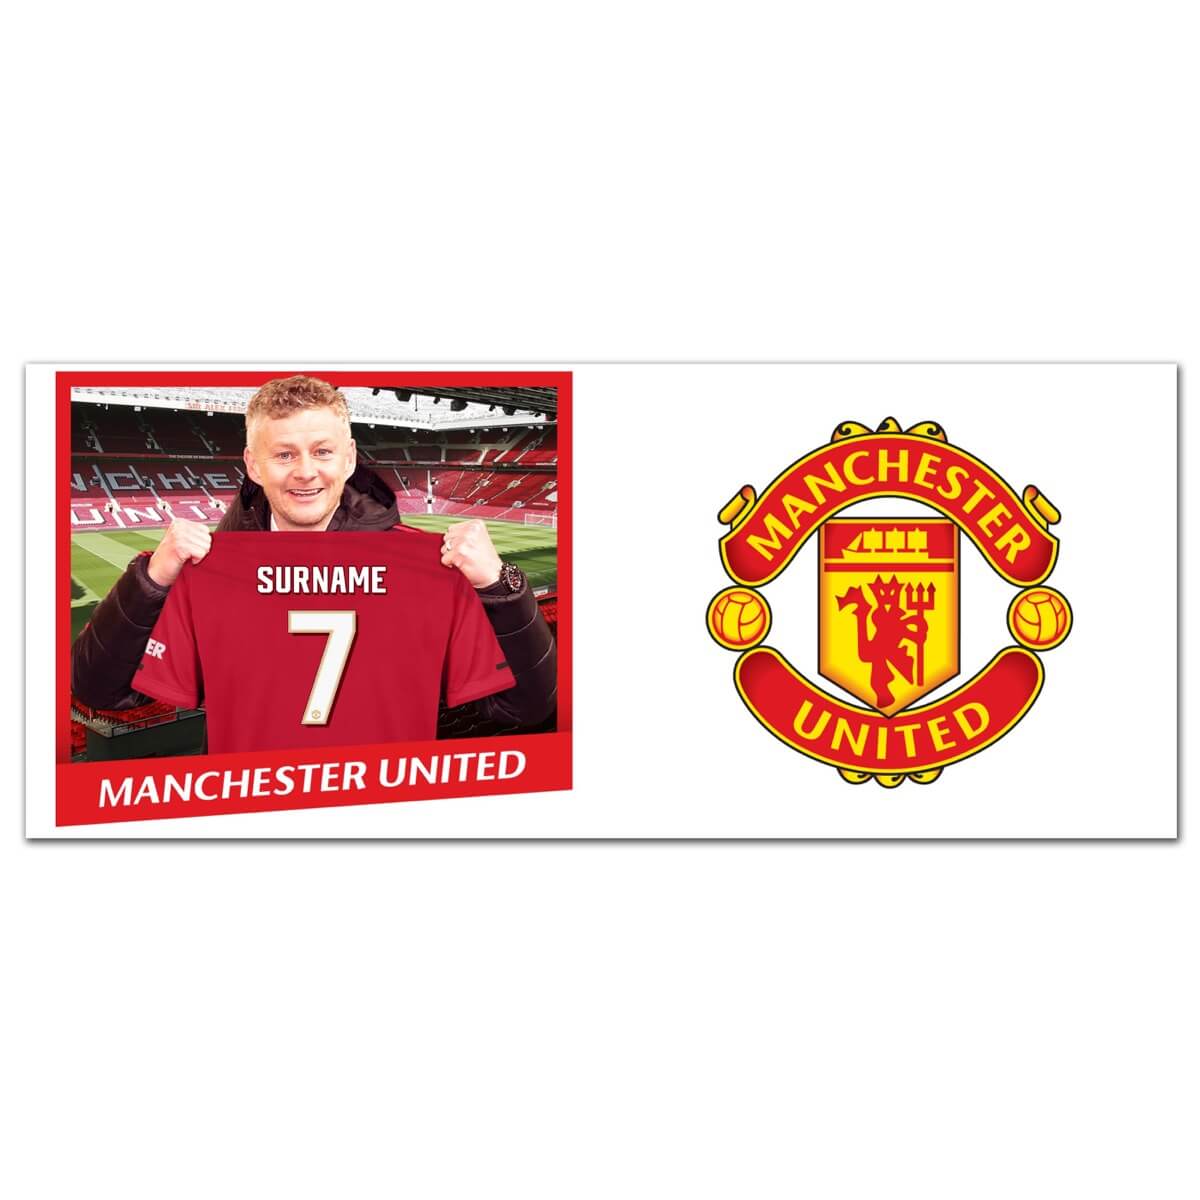 Personalised Manchester United FC Manager Mug